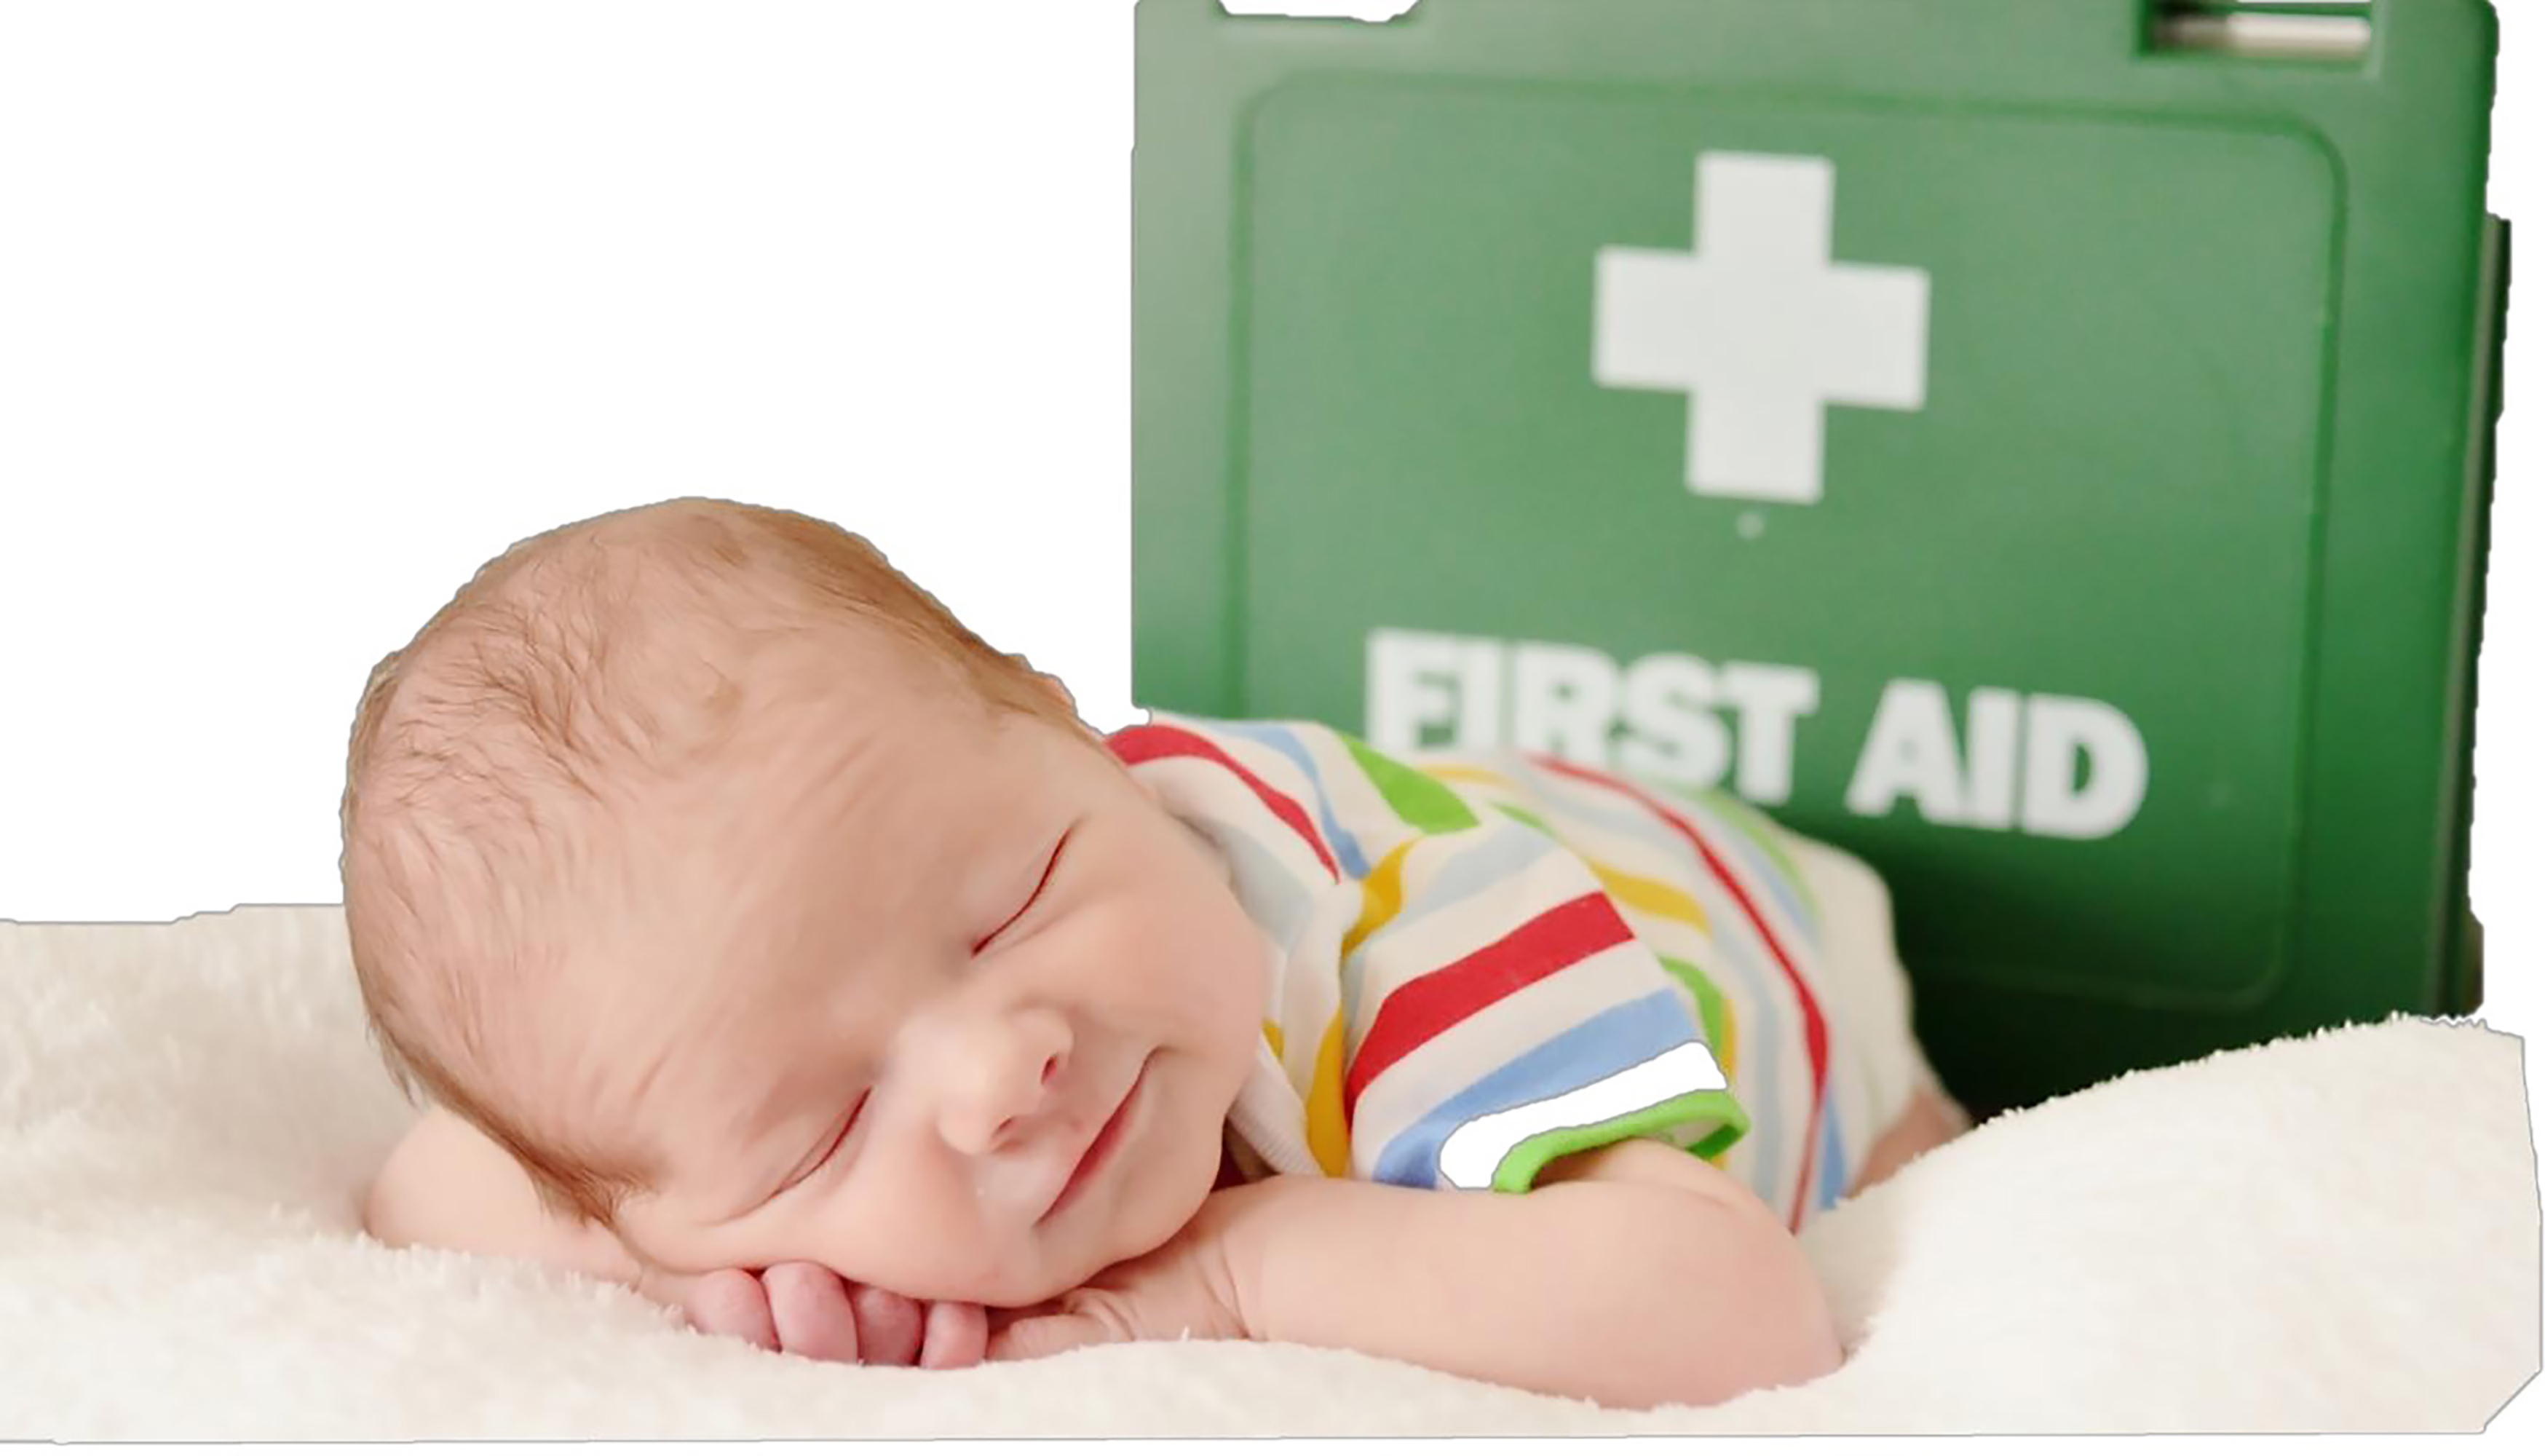 PreparaKit Small Compact Mini First Aid Kit for Diaper Bag, Travel, Purse, Home and Car